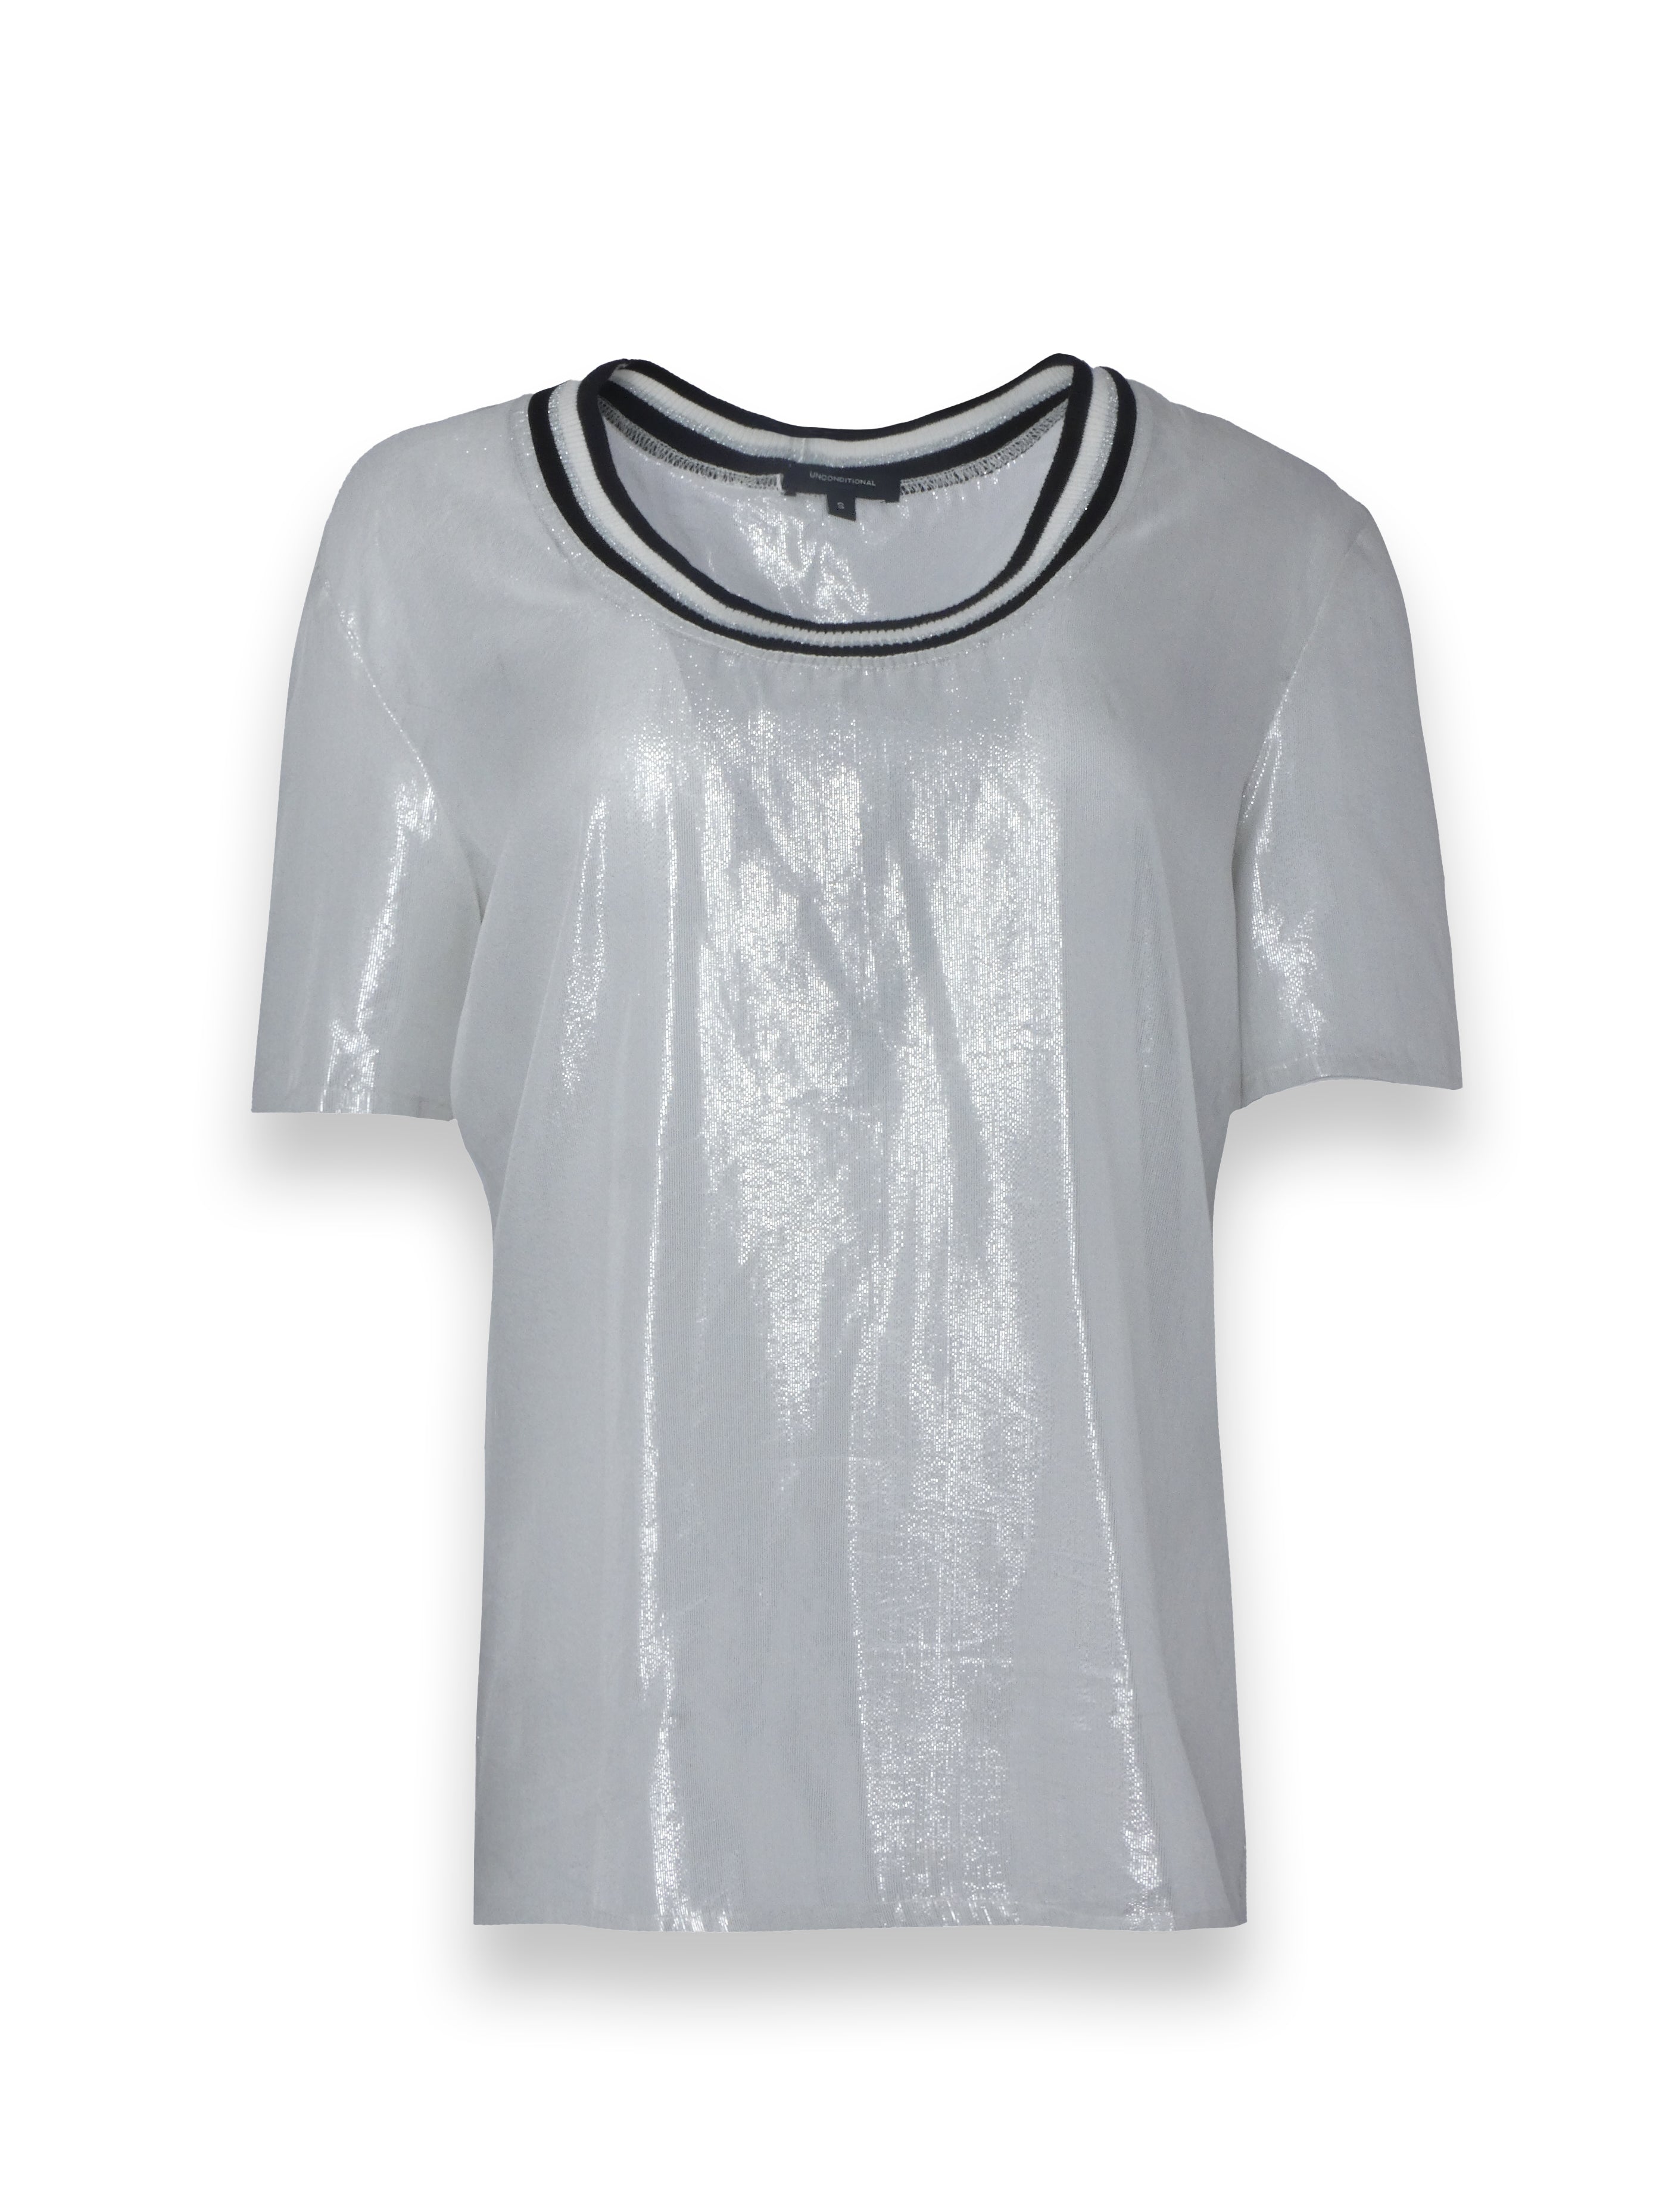 Silver Glitter T-Shirt With Black Striped Neckline